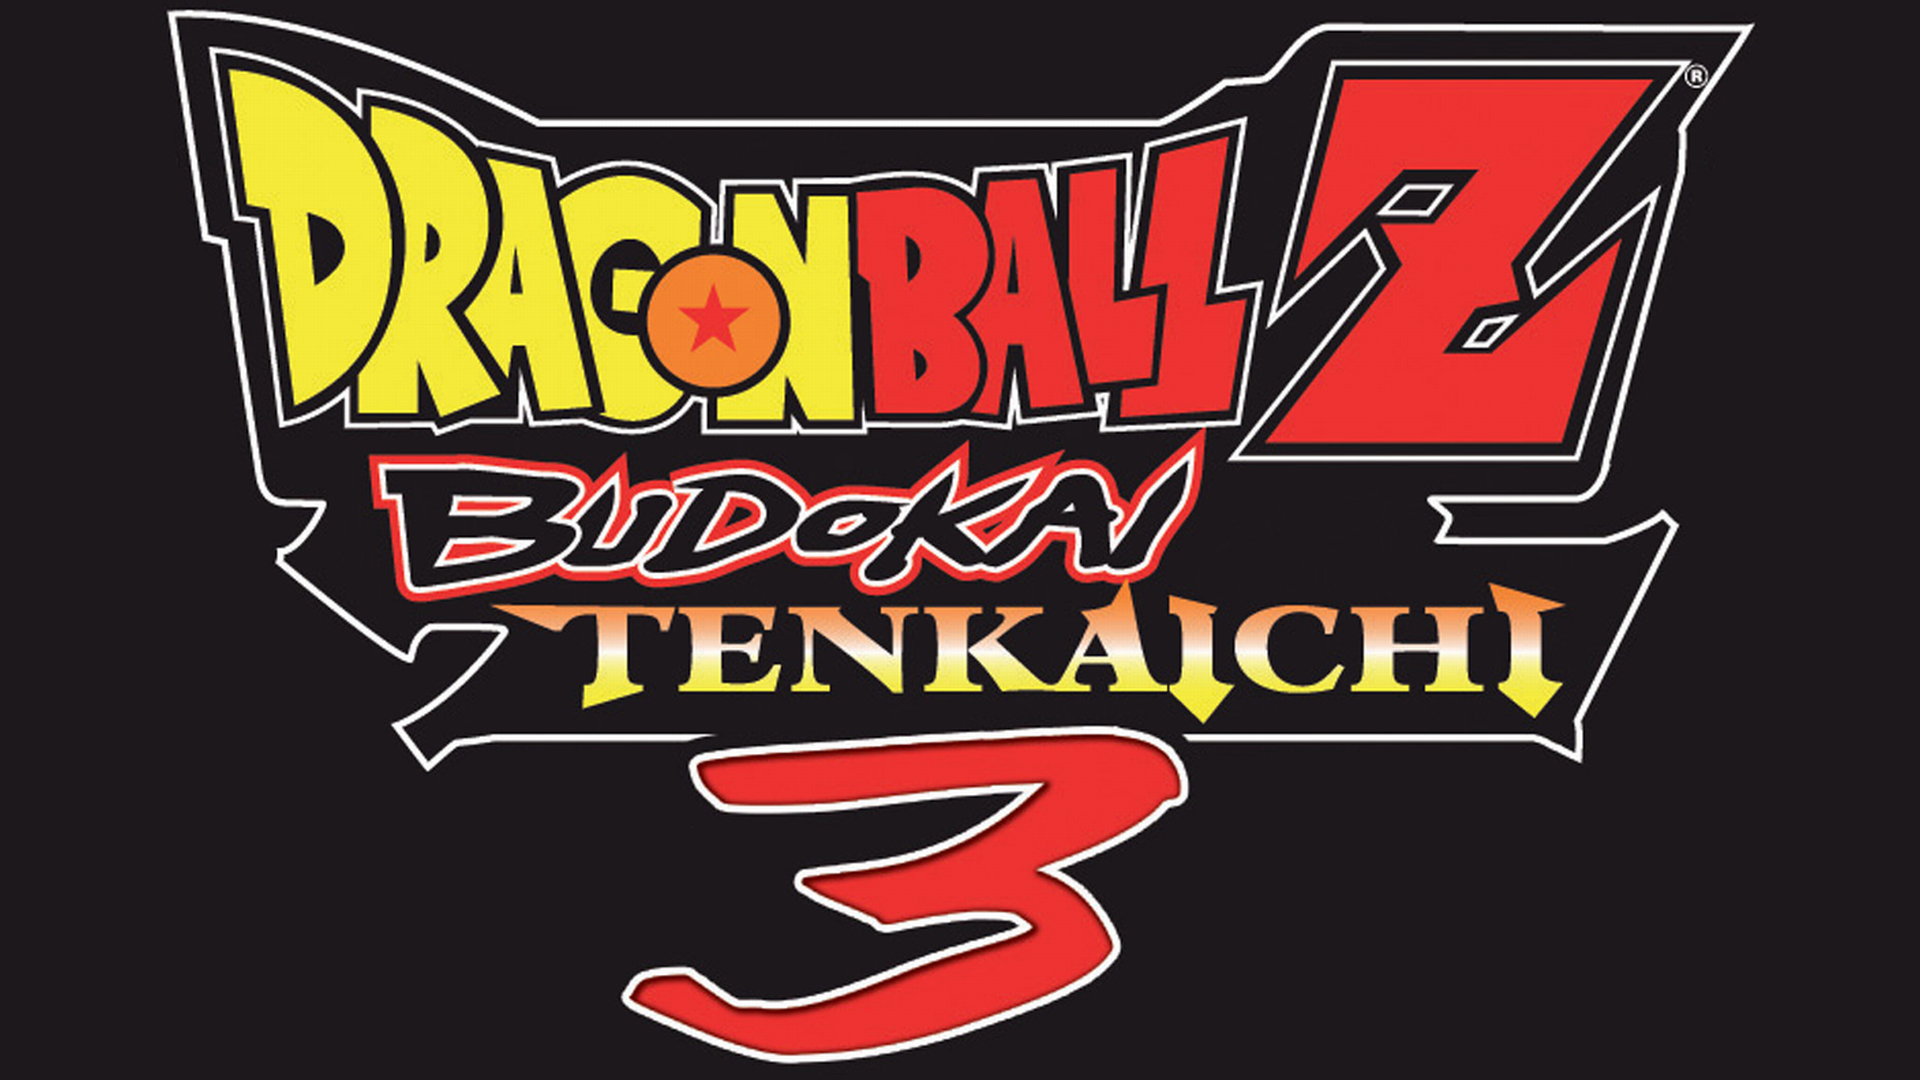 Dragon Ball Z Budokai Tenkaichi 3 Wallpapers - Wallpaper Cave